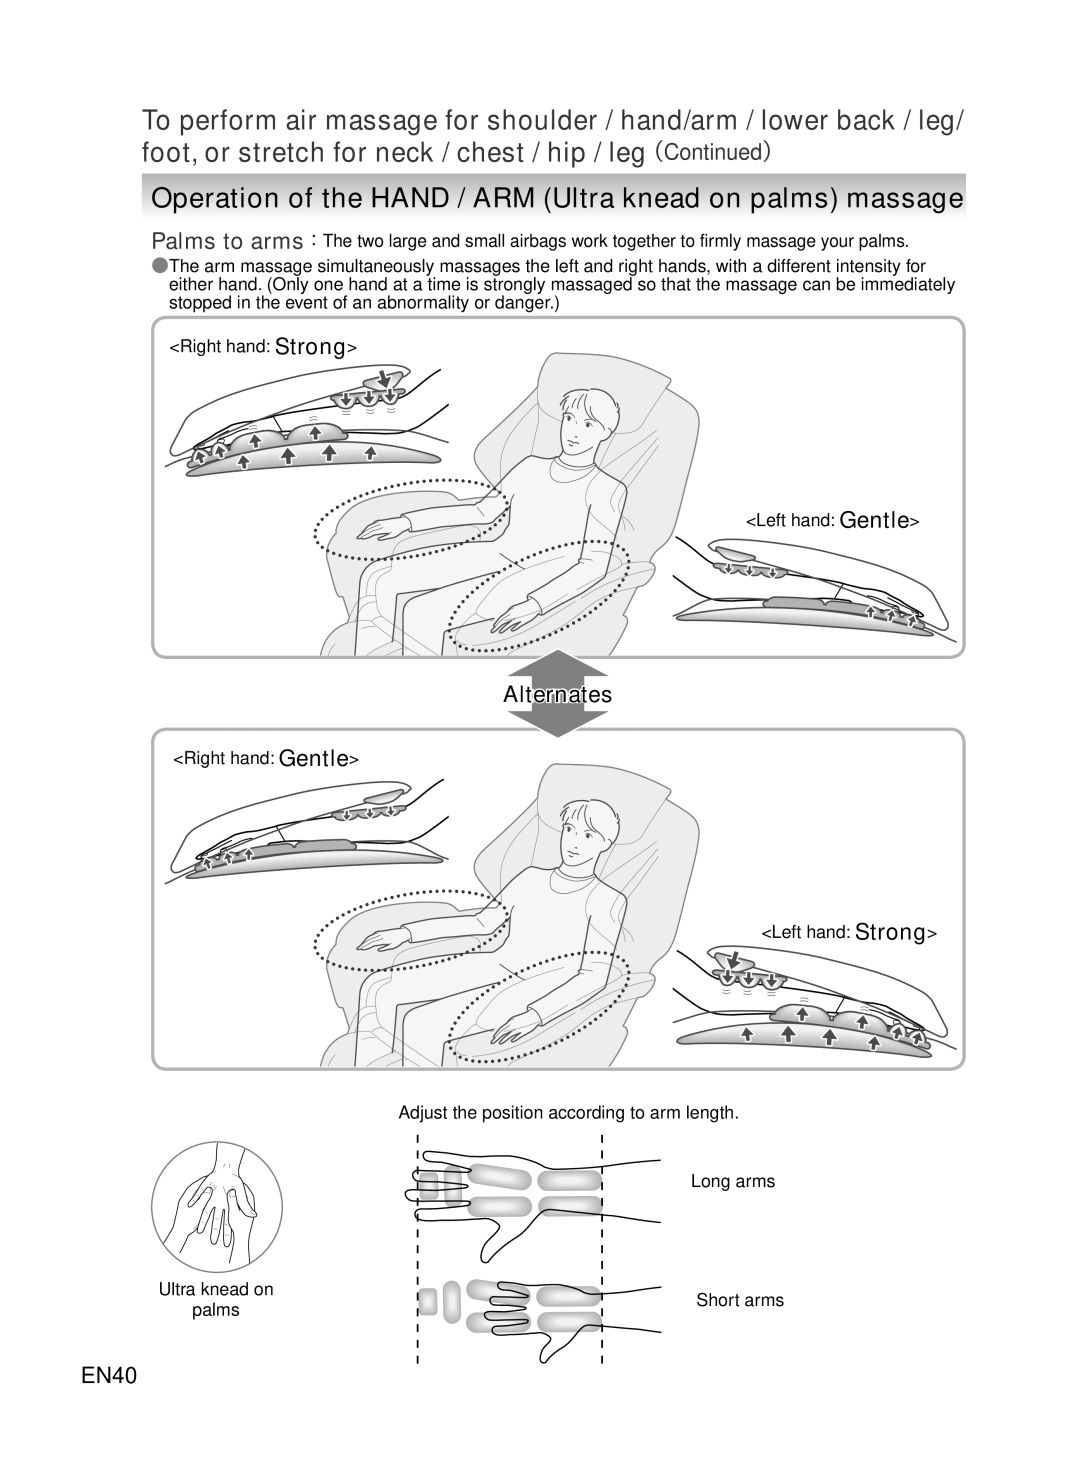 Panasonic EP-MA73 manual Operation of the HAND / ARM Ultra knead on palms massage, Alternates, EN40 